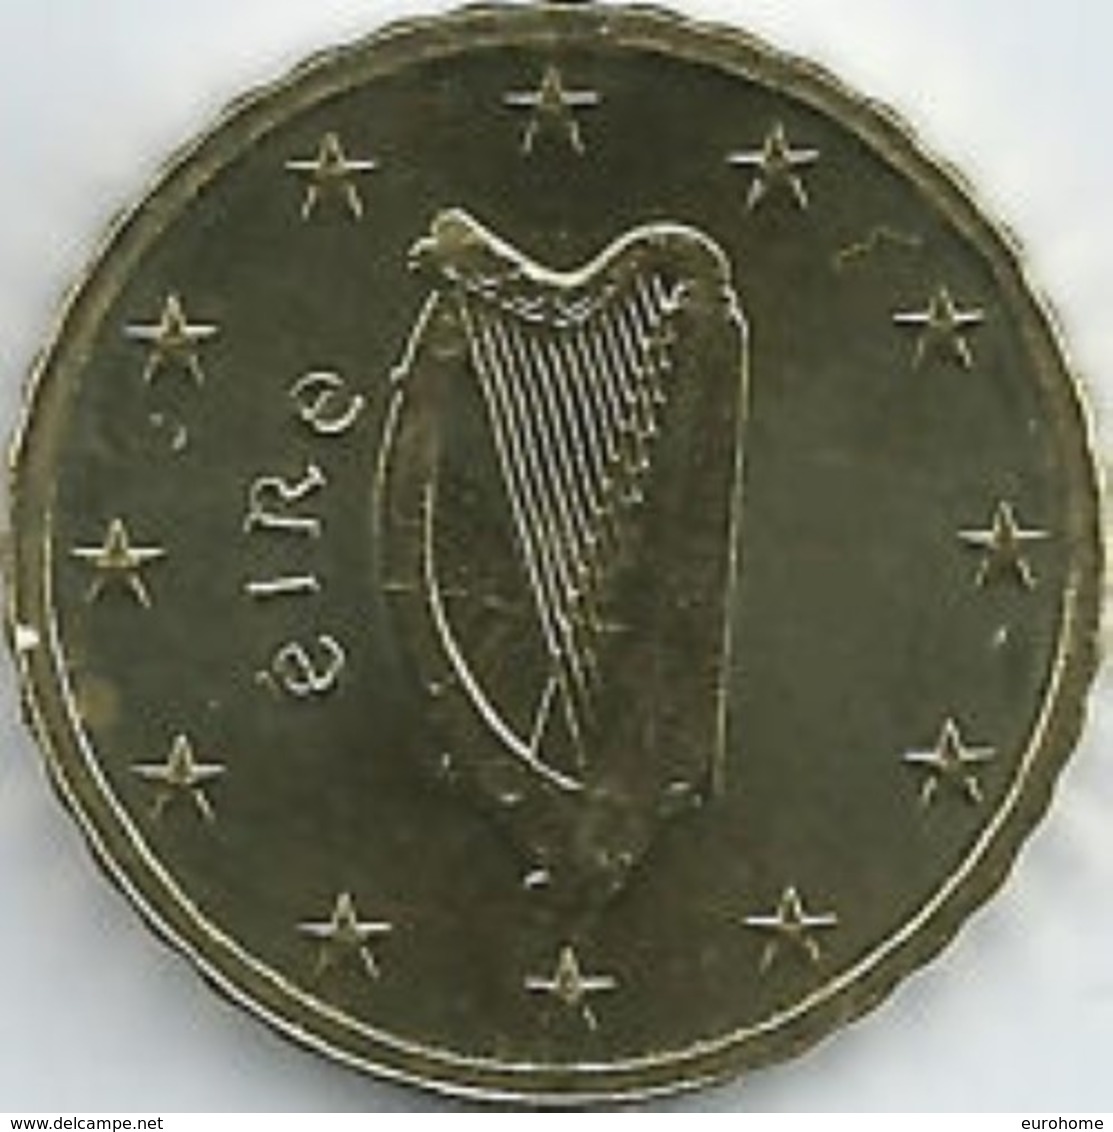 Ierland 2019  10 Cent  UNC Uit De BU  UNC Du Coffret  ZEER ZELDZAAM - EXTREME RARE  8.000 Ex !!! - Irlanda